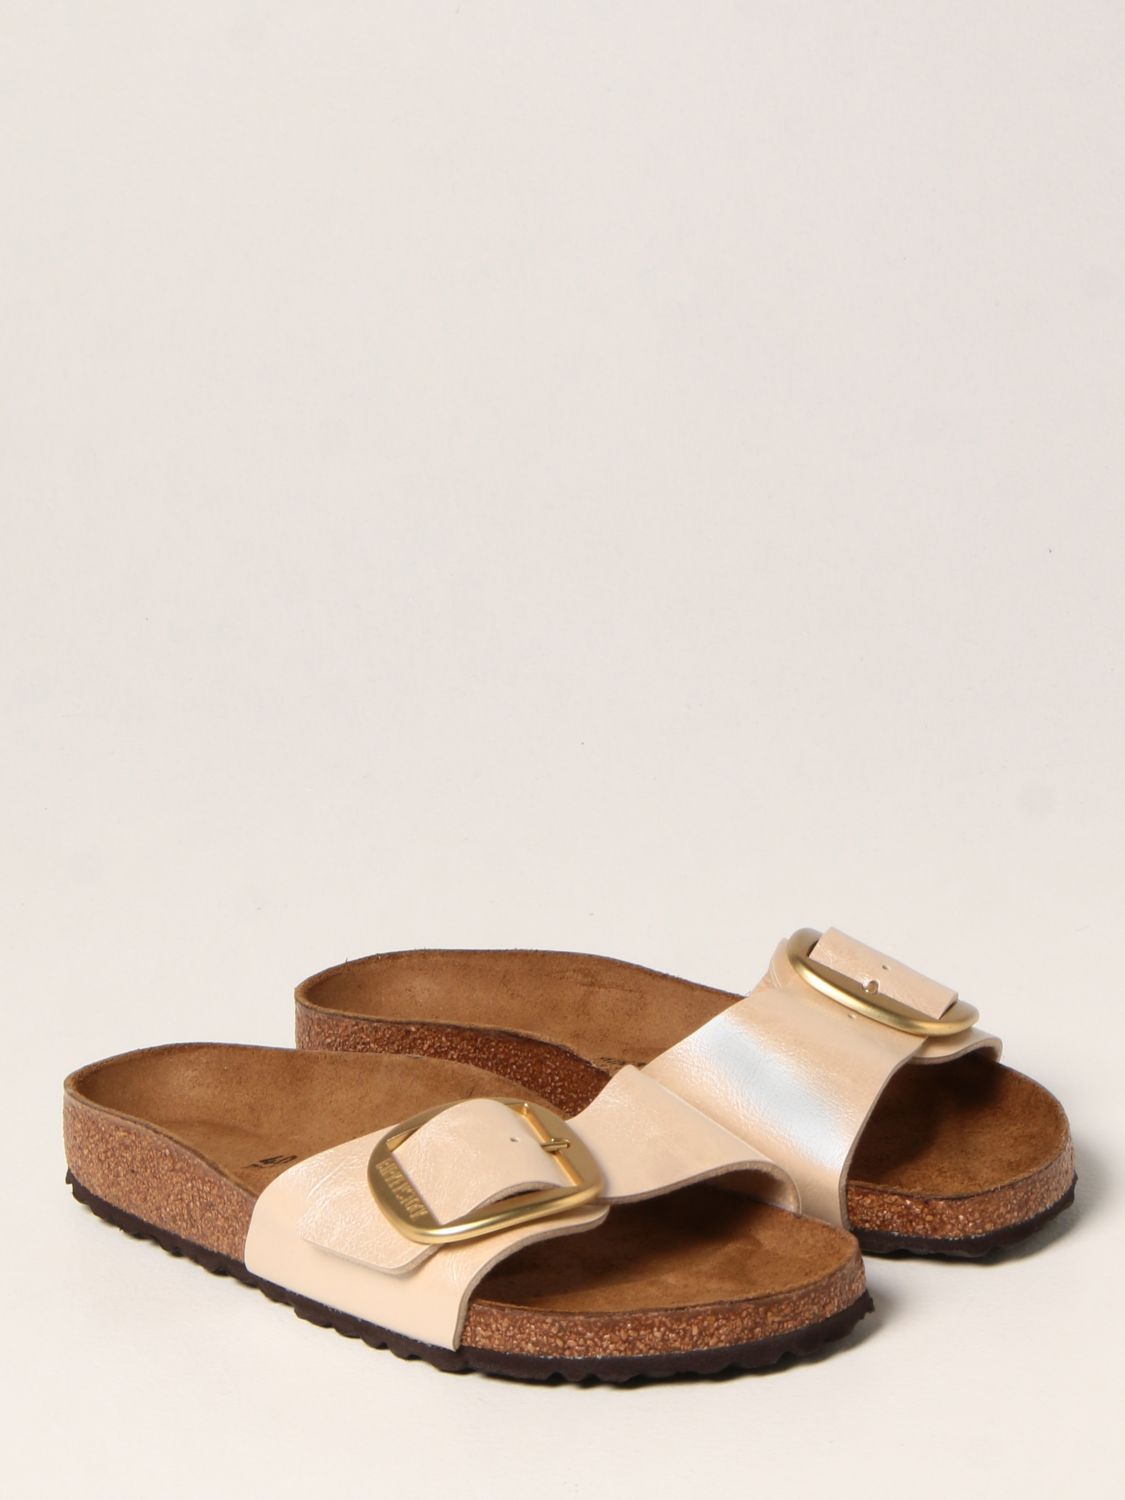 Sandales plates Birkenstock: Chaussures femme Birkenstock blanc 2